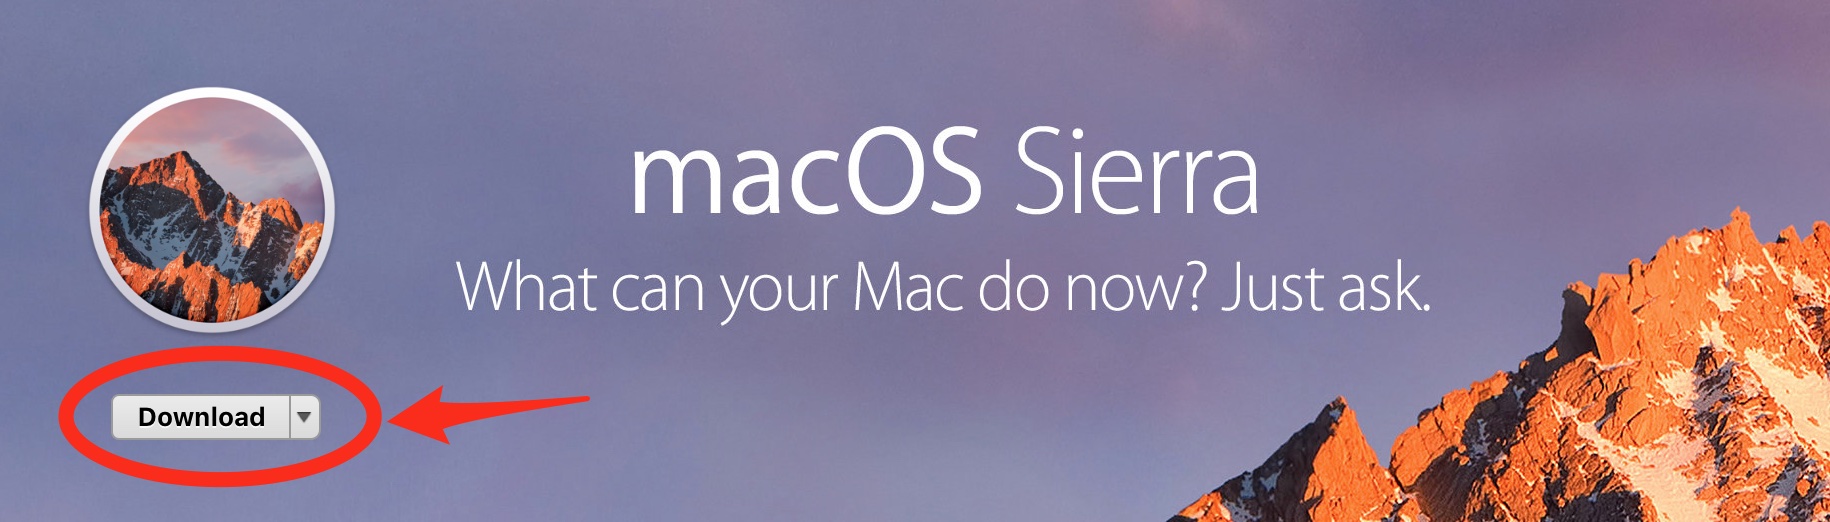 Mac os sierra 10 12 free apple download